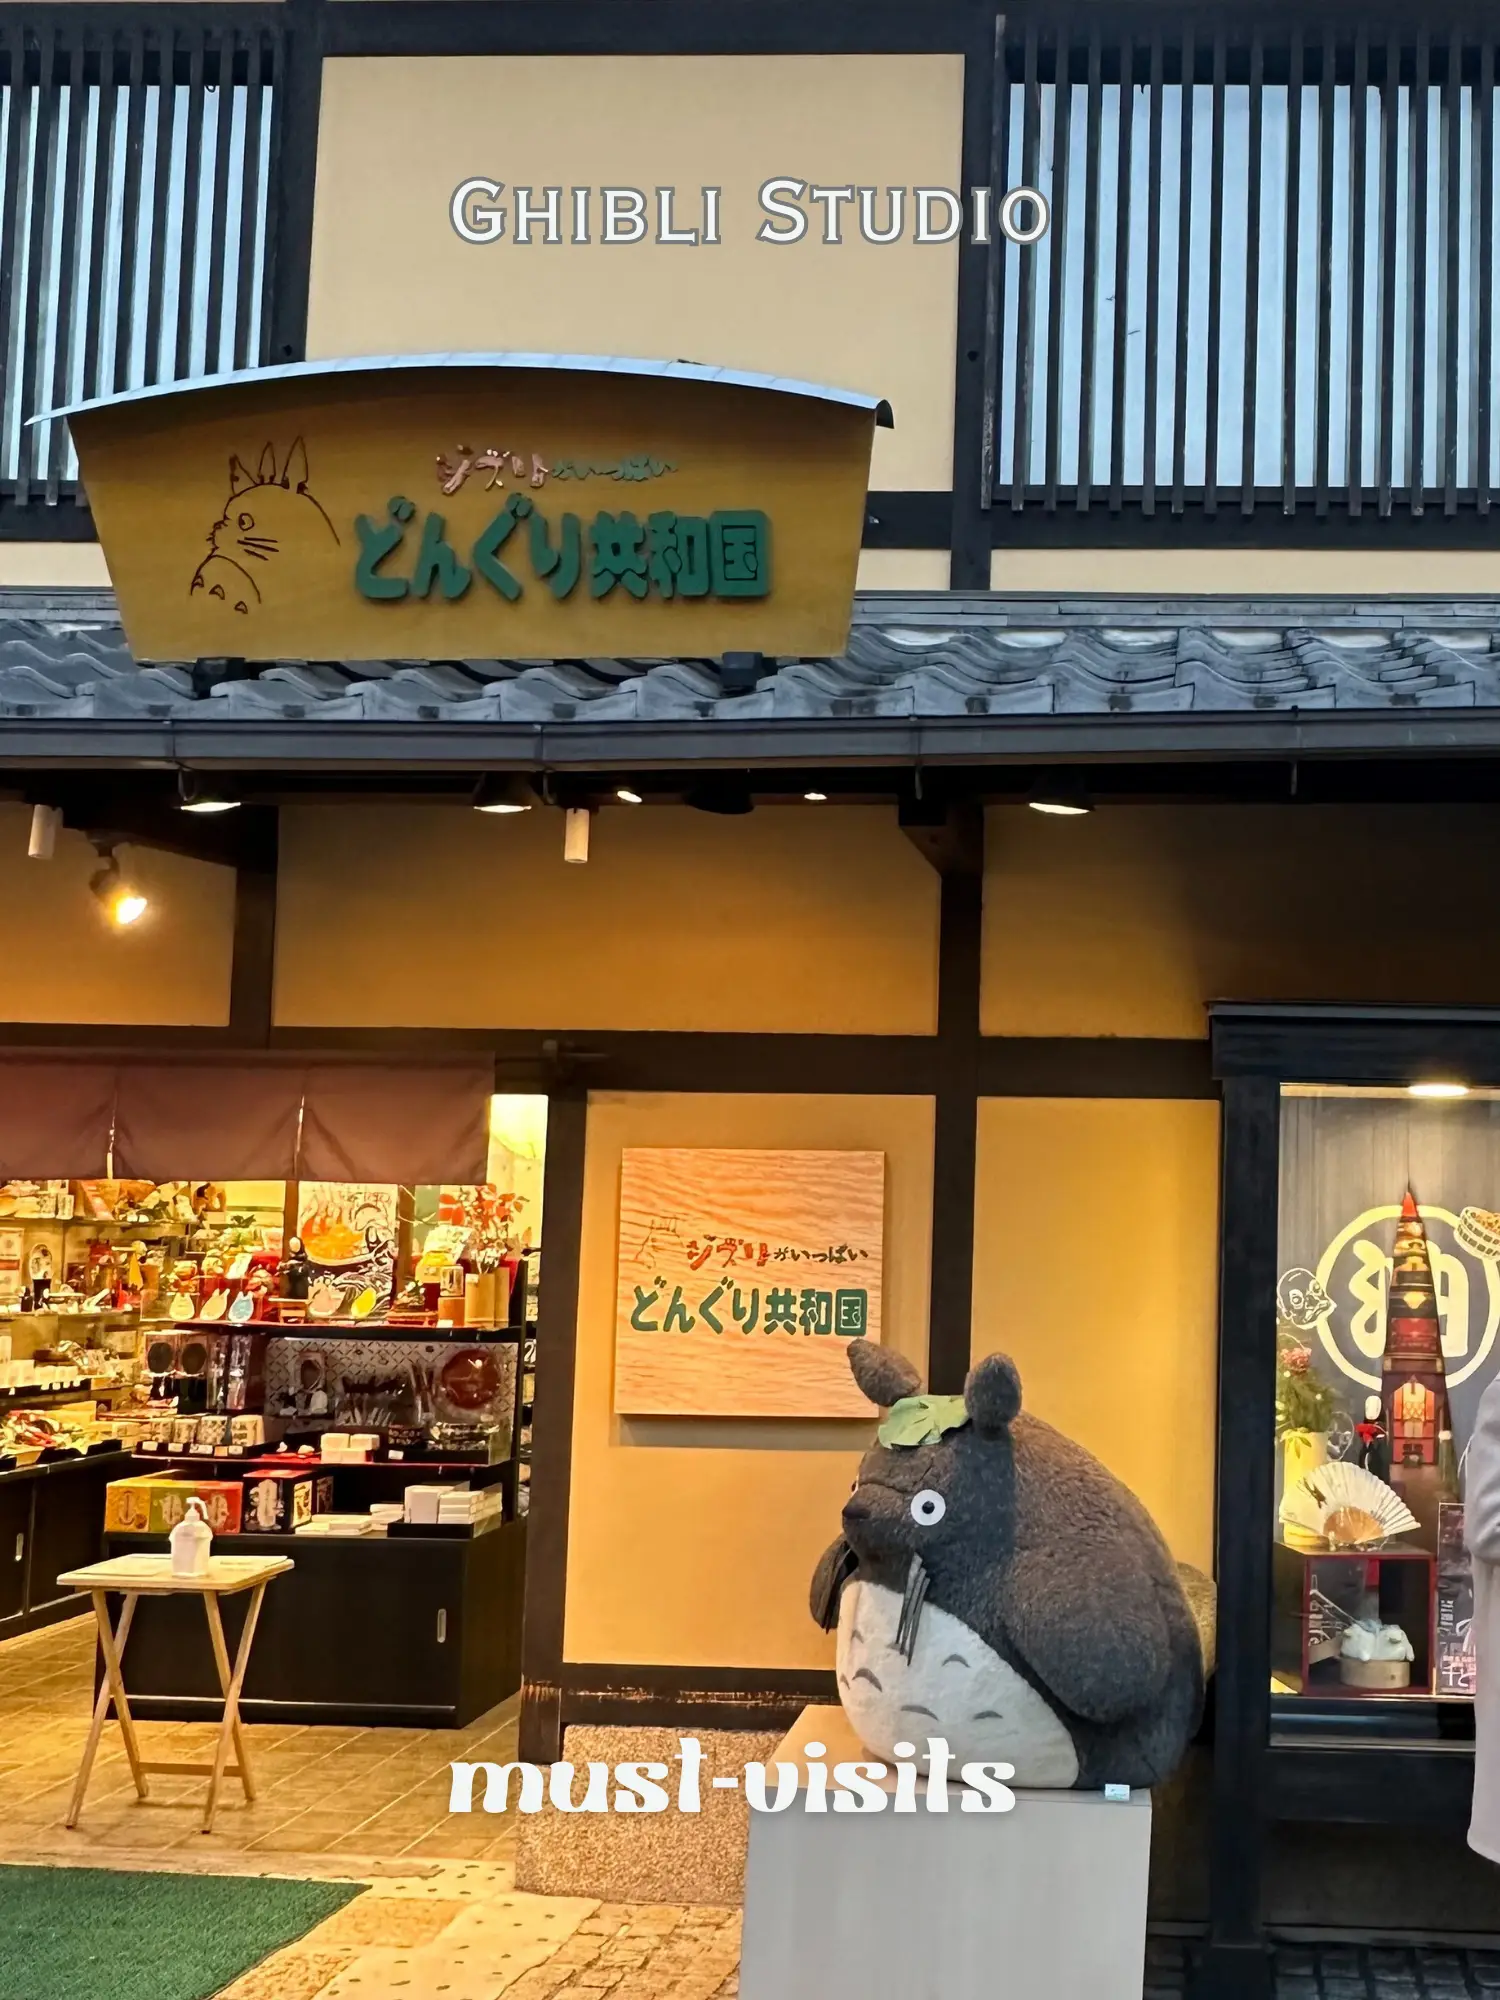 Donguri Republic: Explore the Ghibli World at Kamakura! - Japan Web Magazine